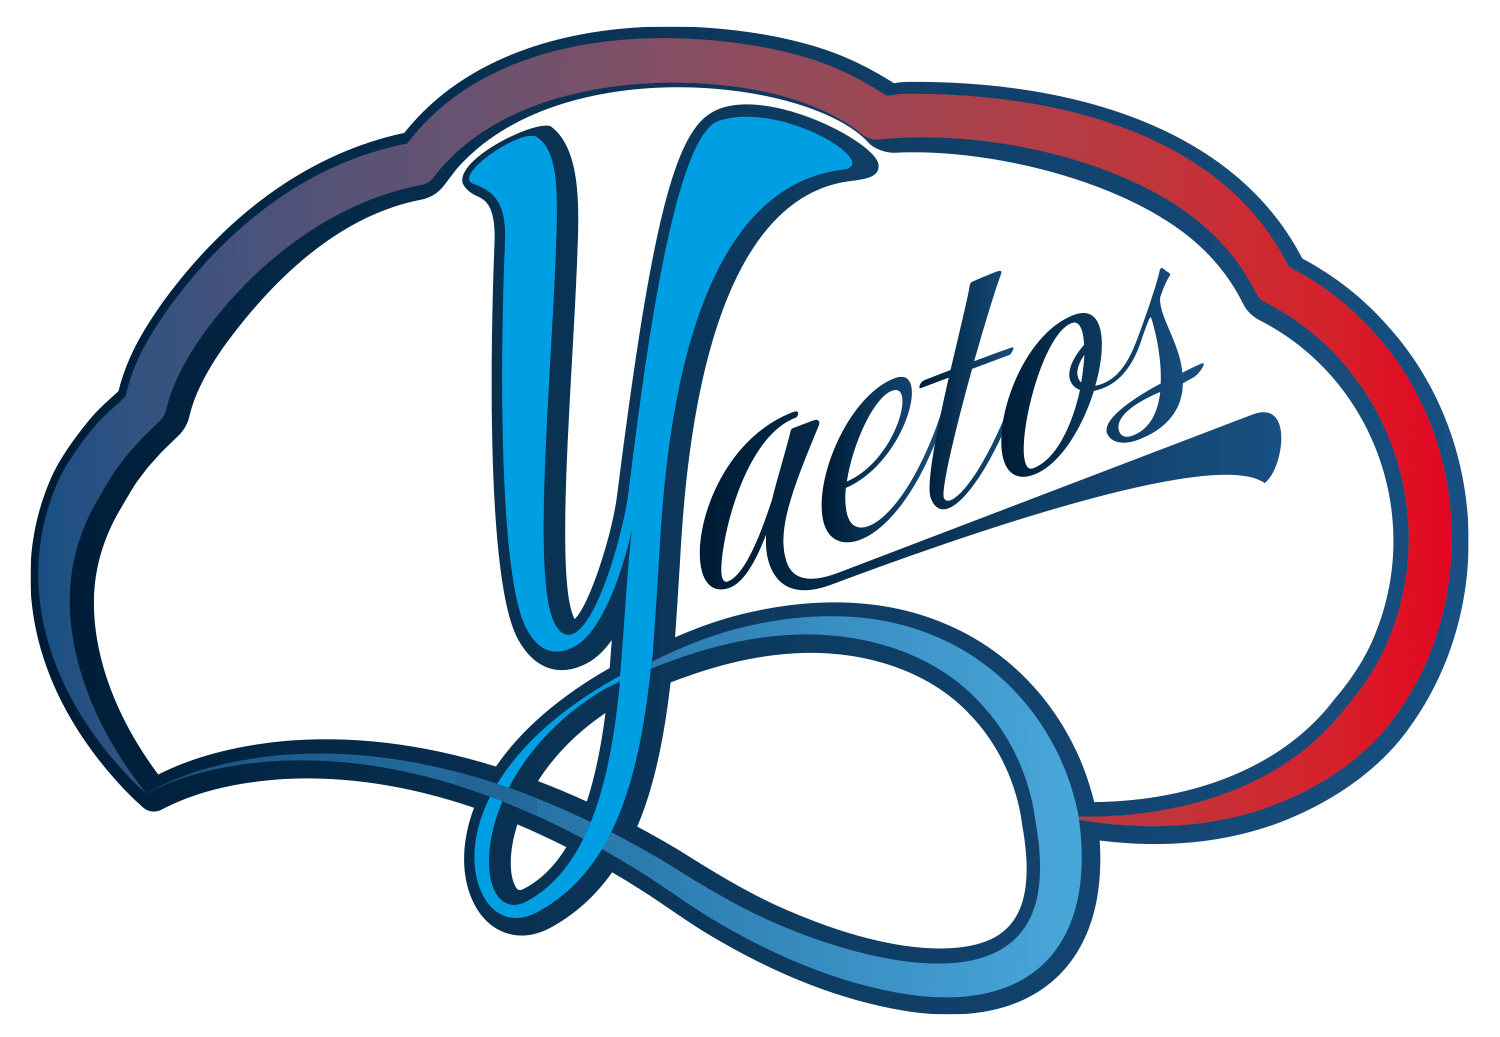 Yaetos | The Data Pipeline Framework